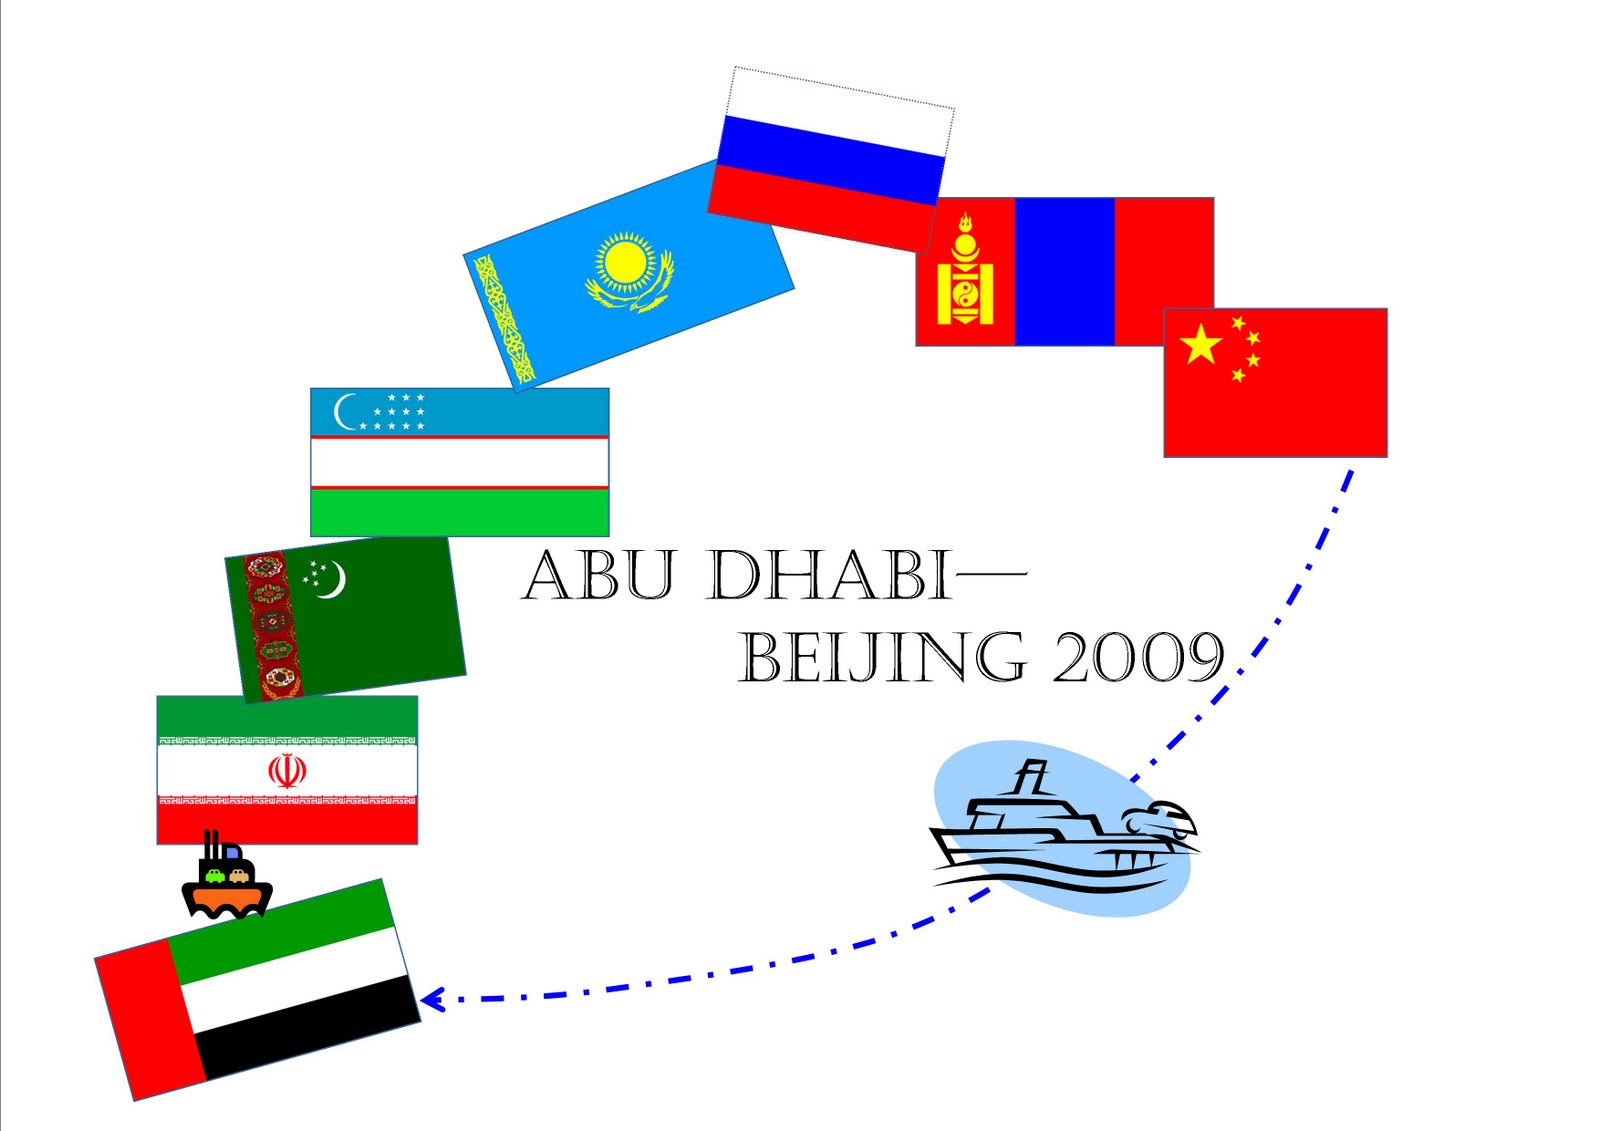 Abu Dhabi - Beijing 2009